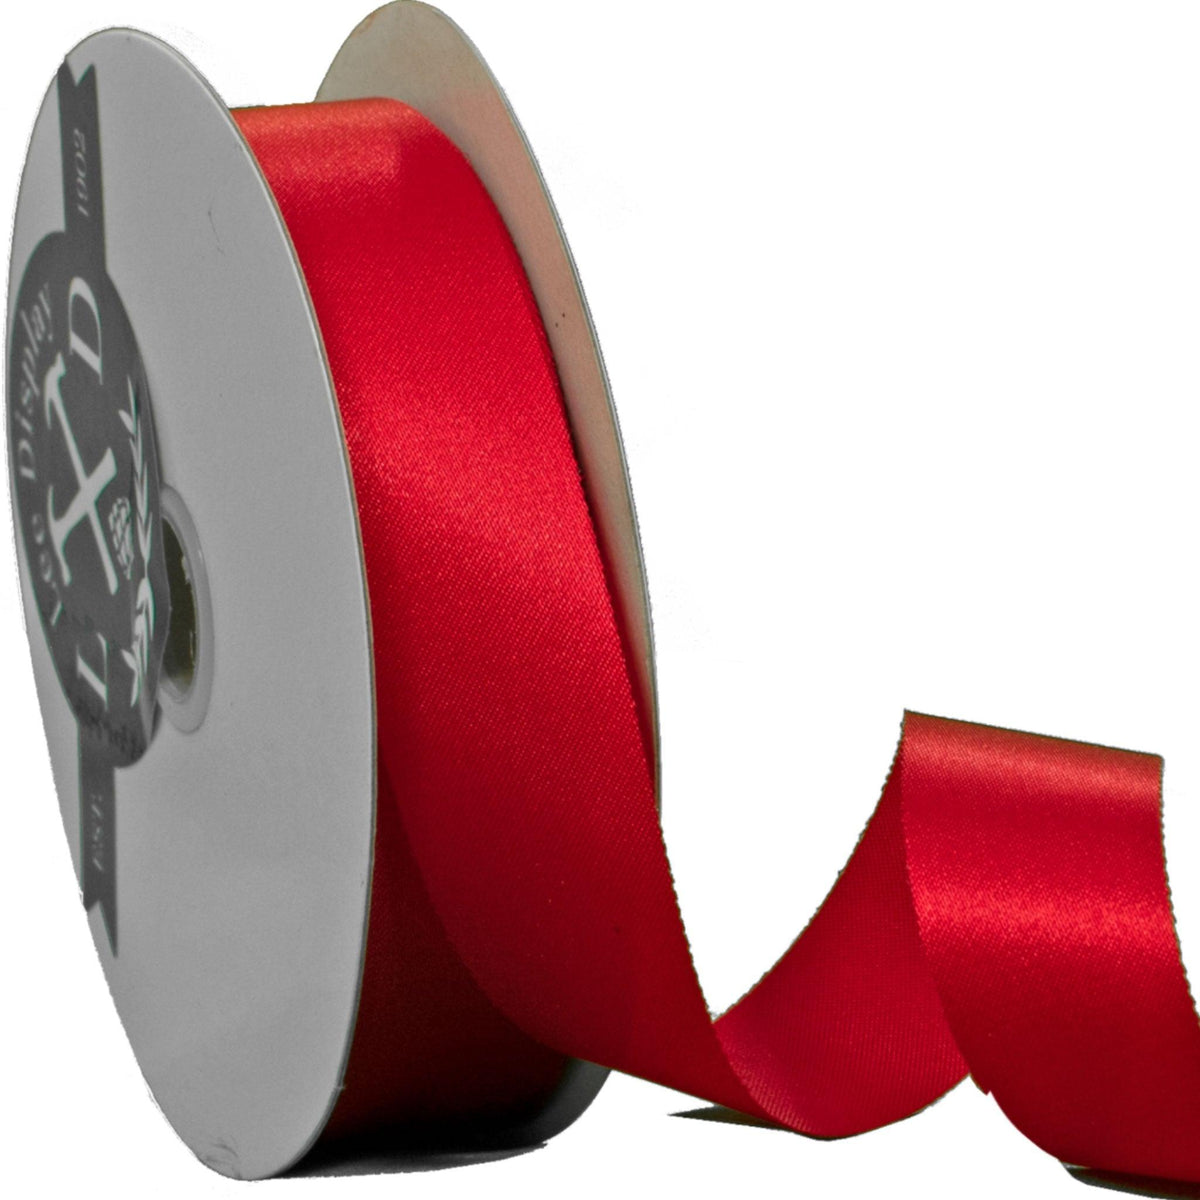 50 Yard Rolls of Red Christmas Ribbon on Sale at leedisplay.com